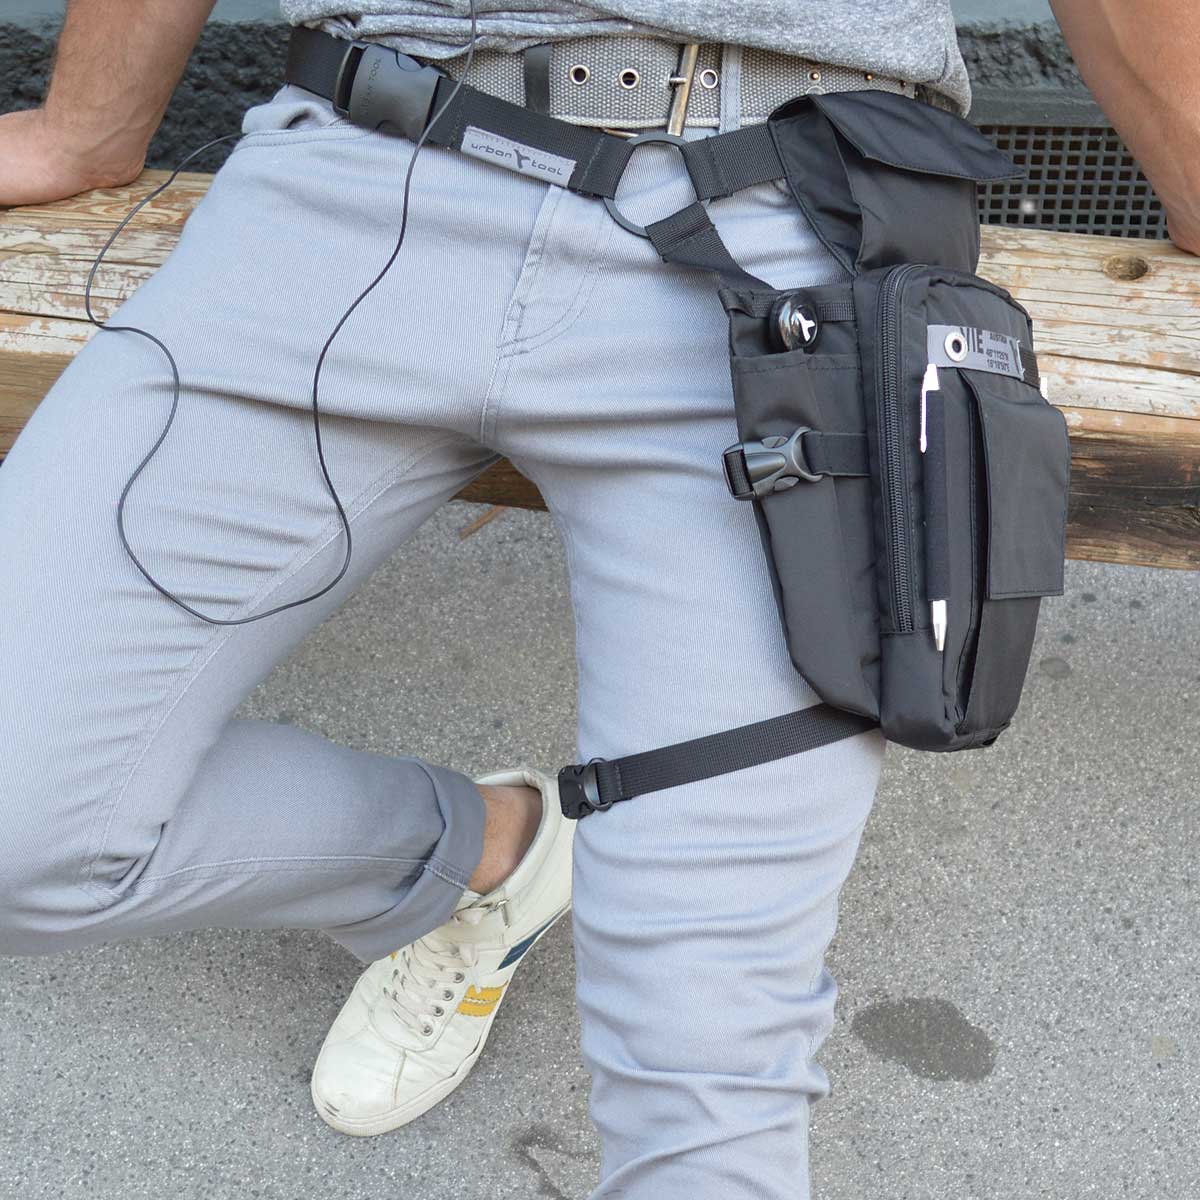 Smartphone and tablet holster waist bag URBAN TOOL ® travel legholster